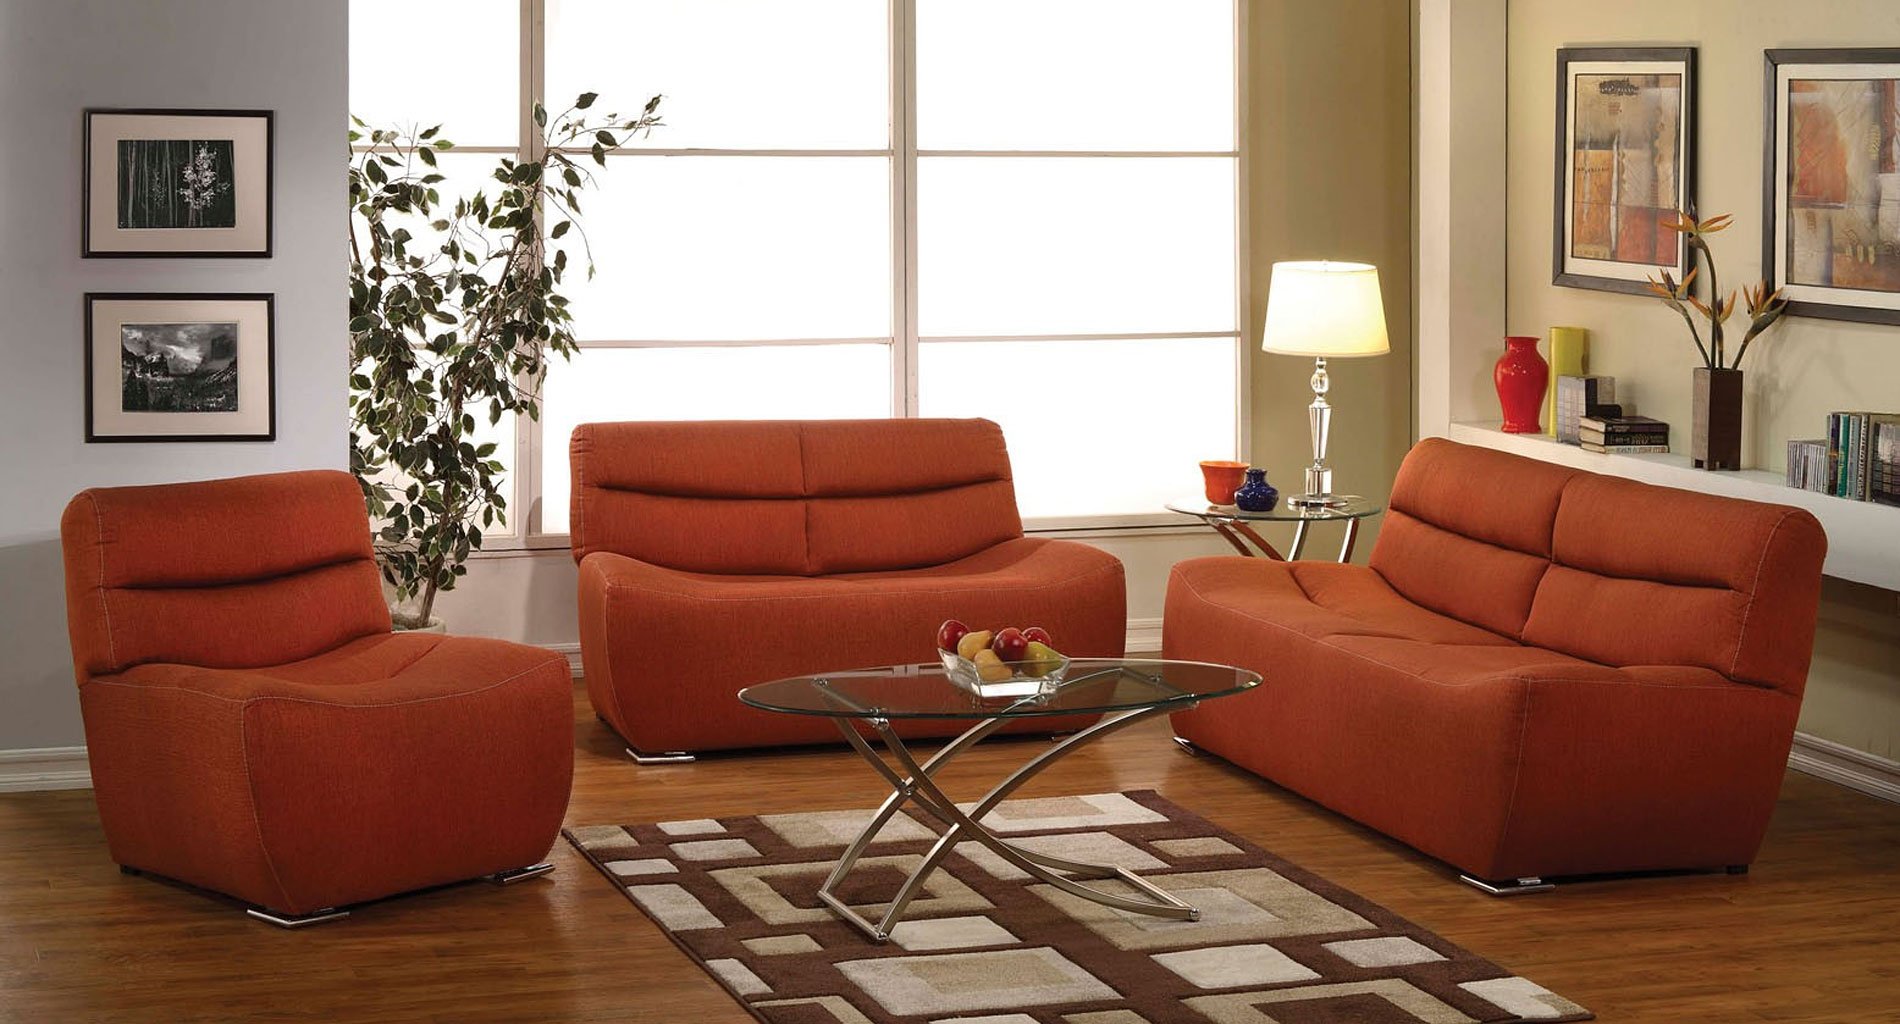 Kainda Living Room Set Orange by Acme Furniture 